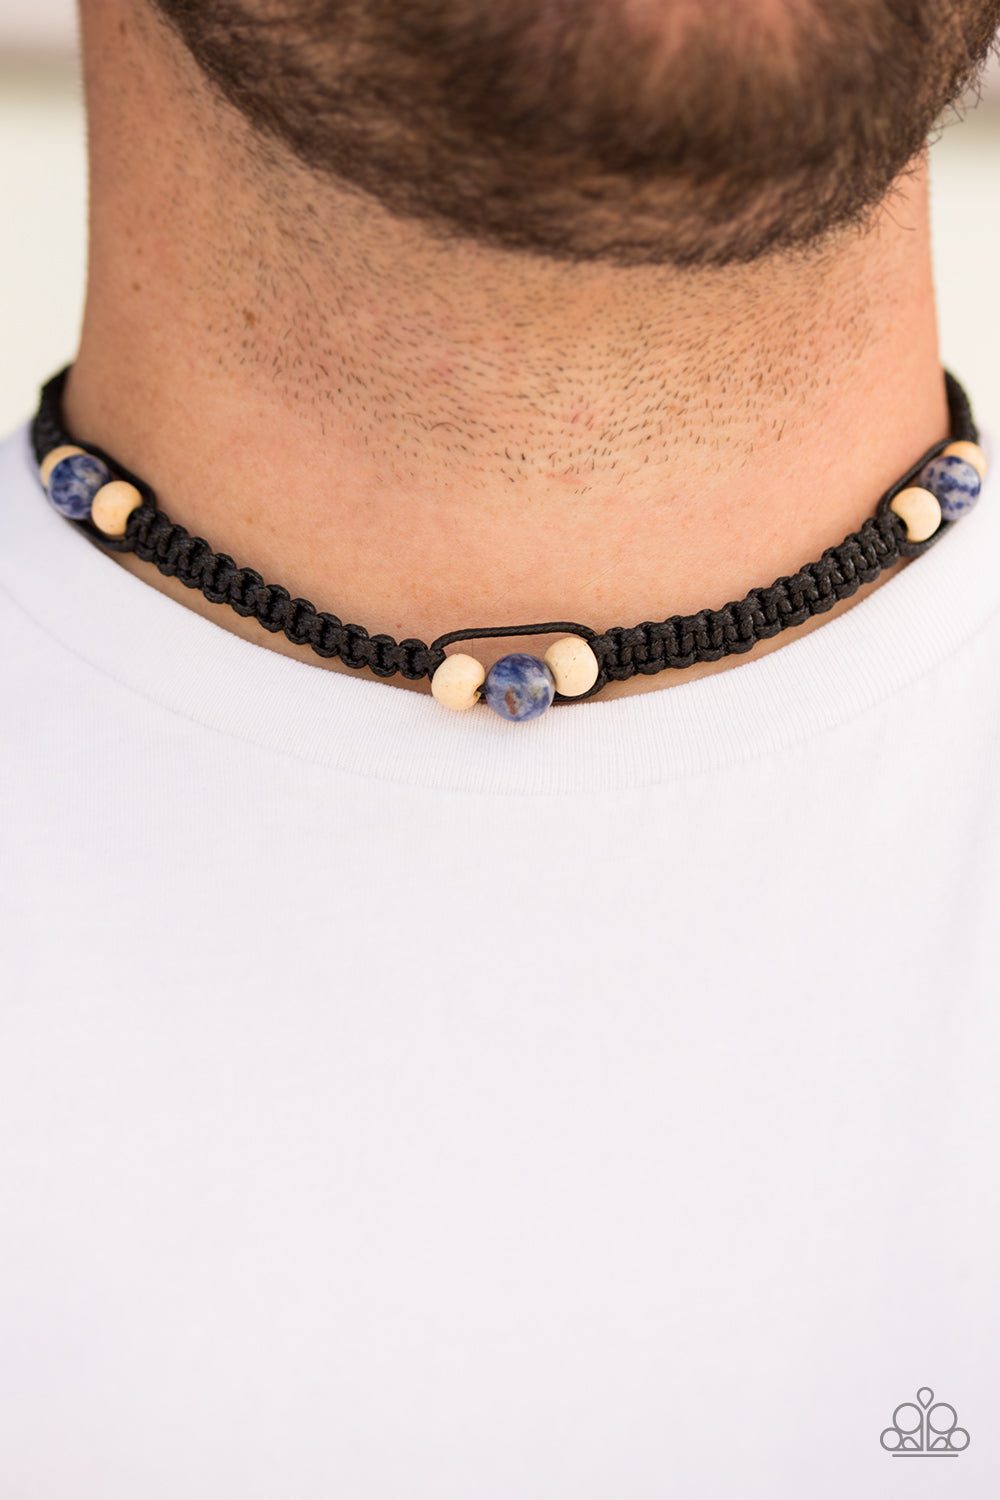 Paparazzi Vitality - Blue Stones - Black Cording - Sliding Knot - Urban Necklace - $5 Jewelry With Ashley Swint